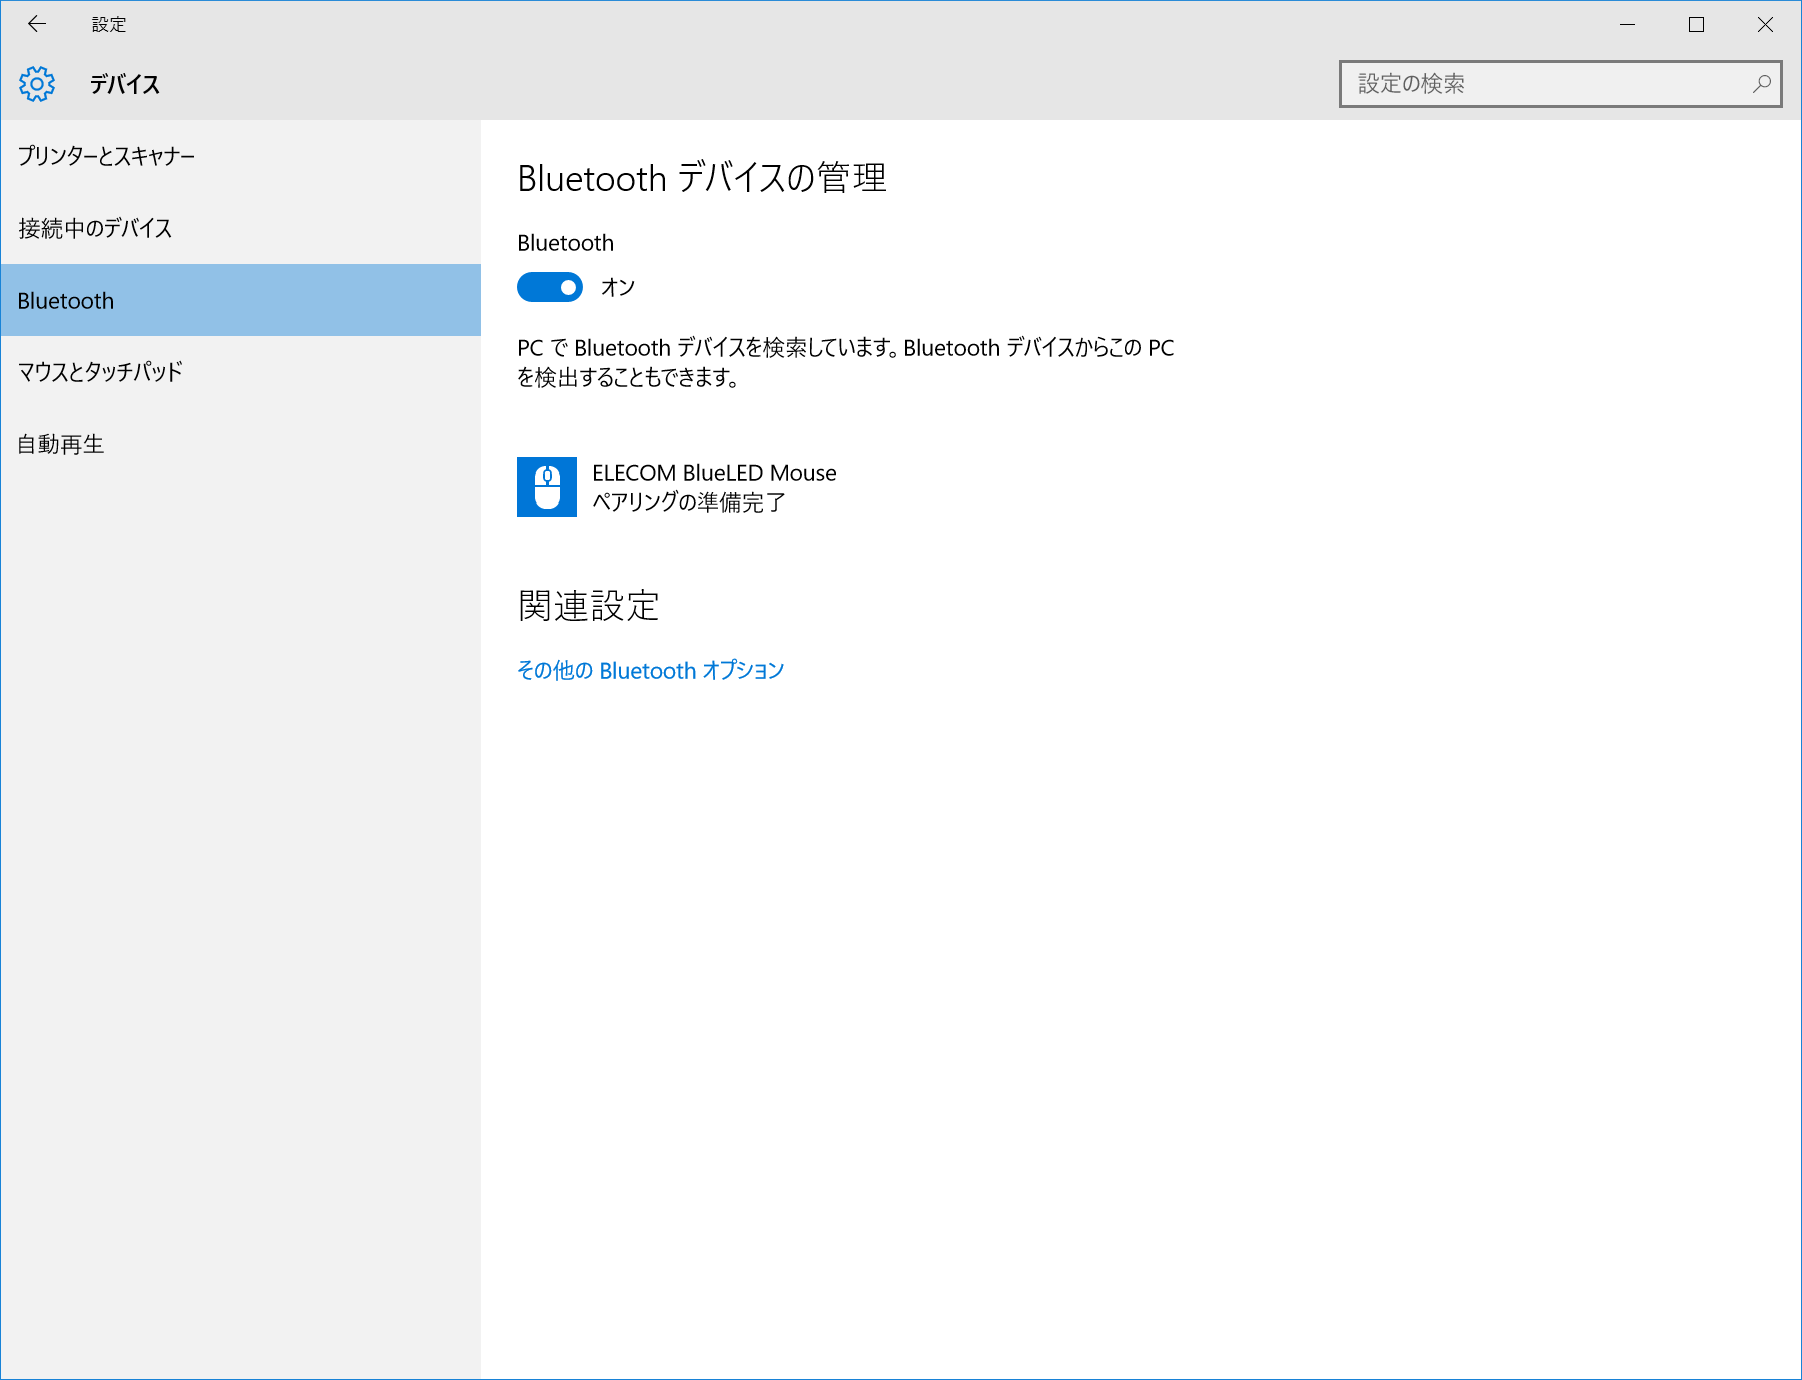 bluetooth usb host controller mac for windows 10